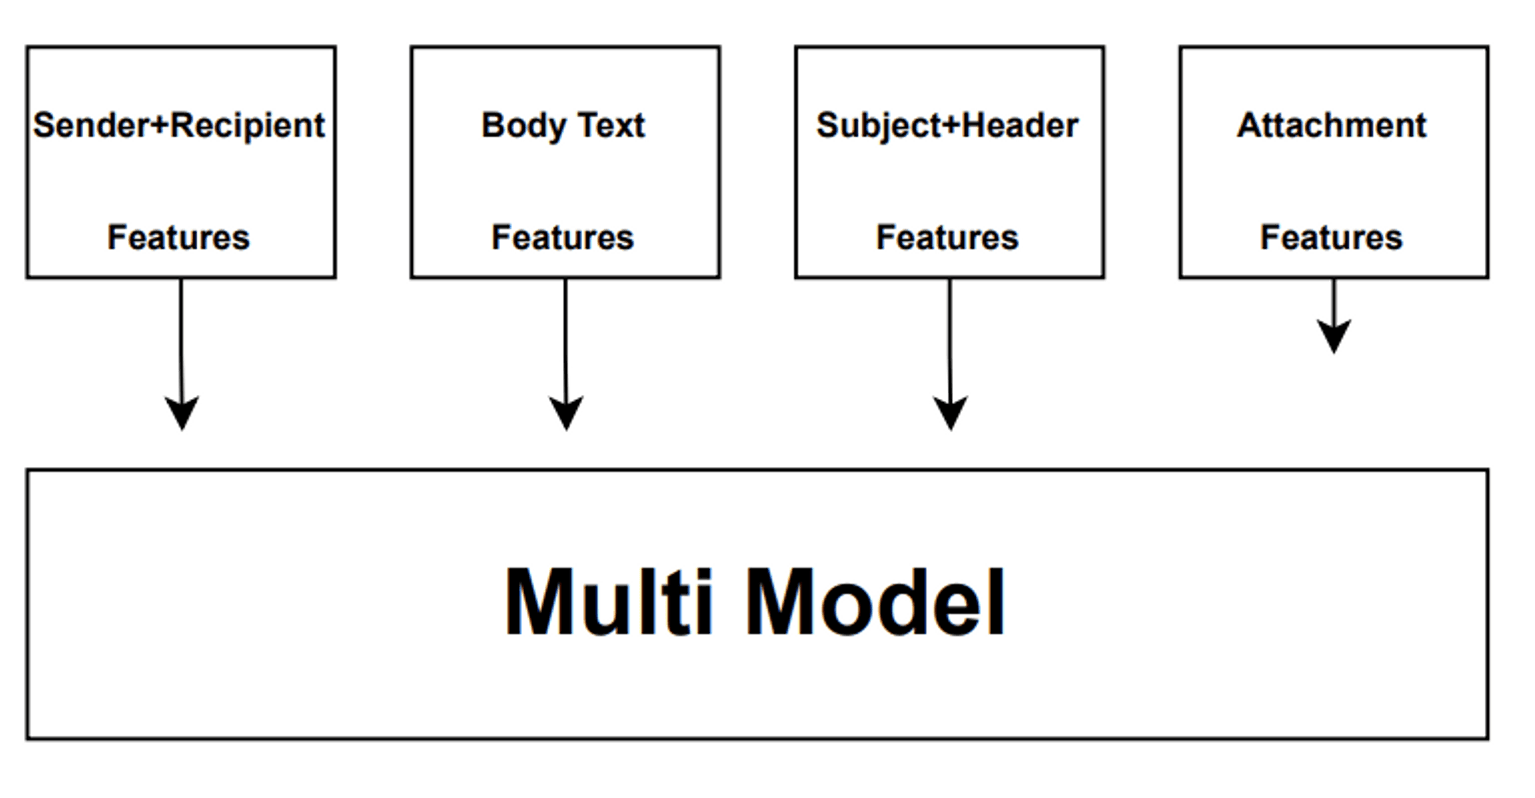 Attack Multi Model understands suspicious attachments: attachment features are least important